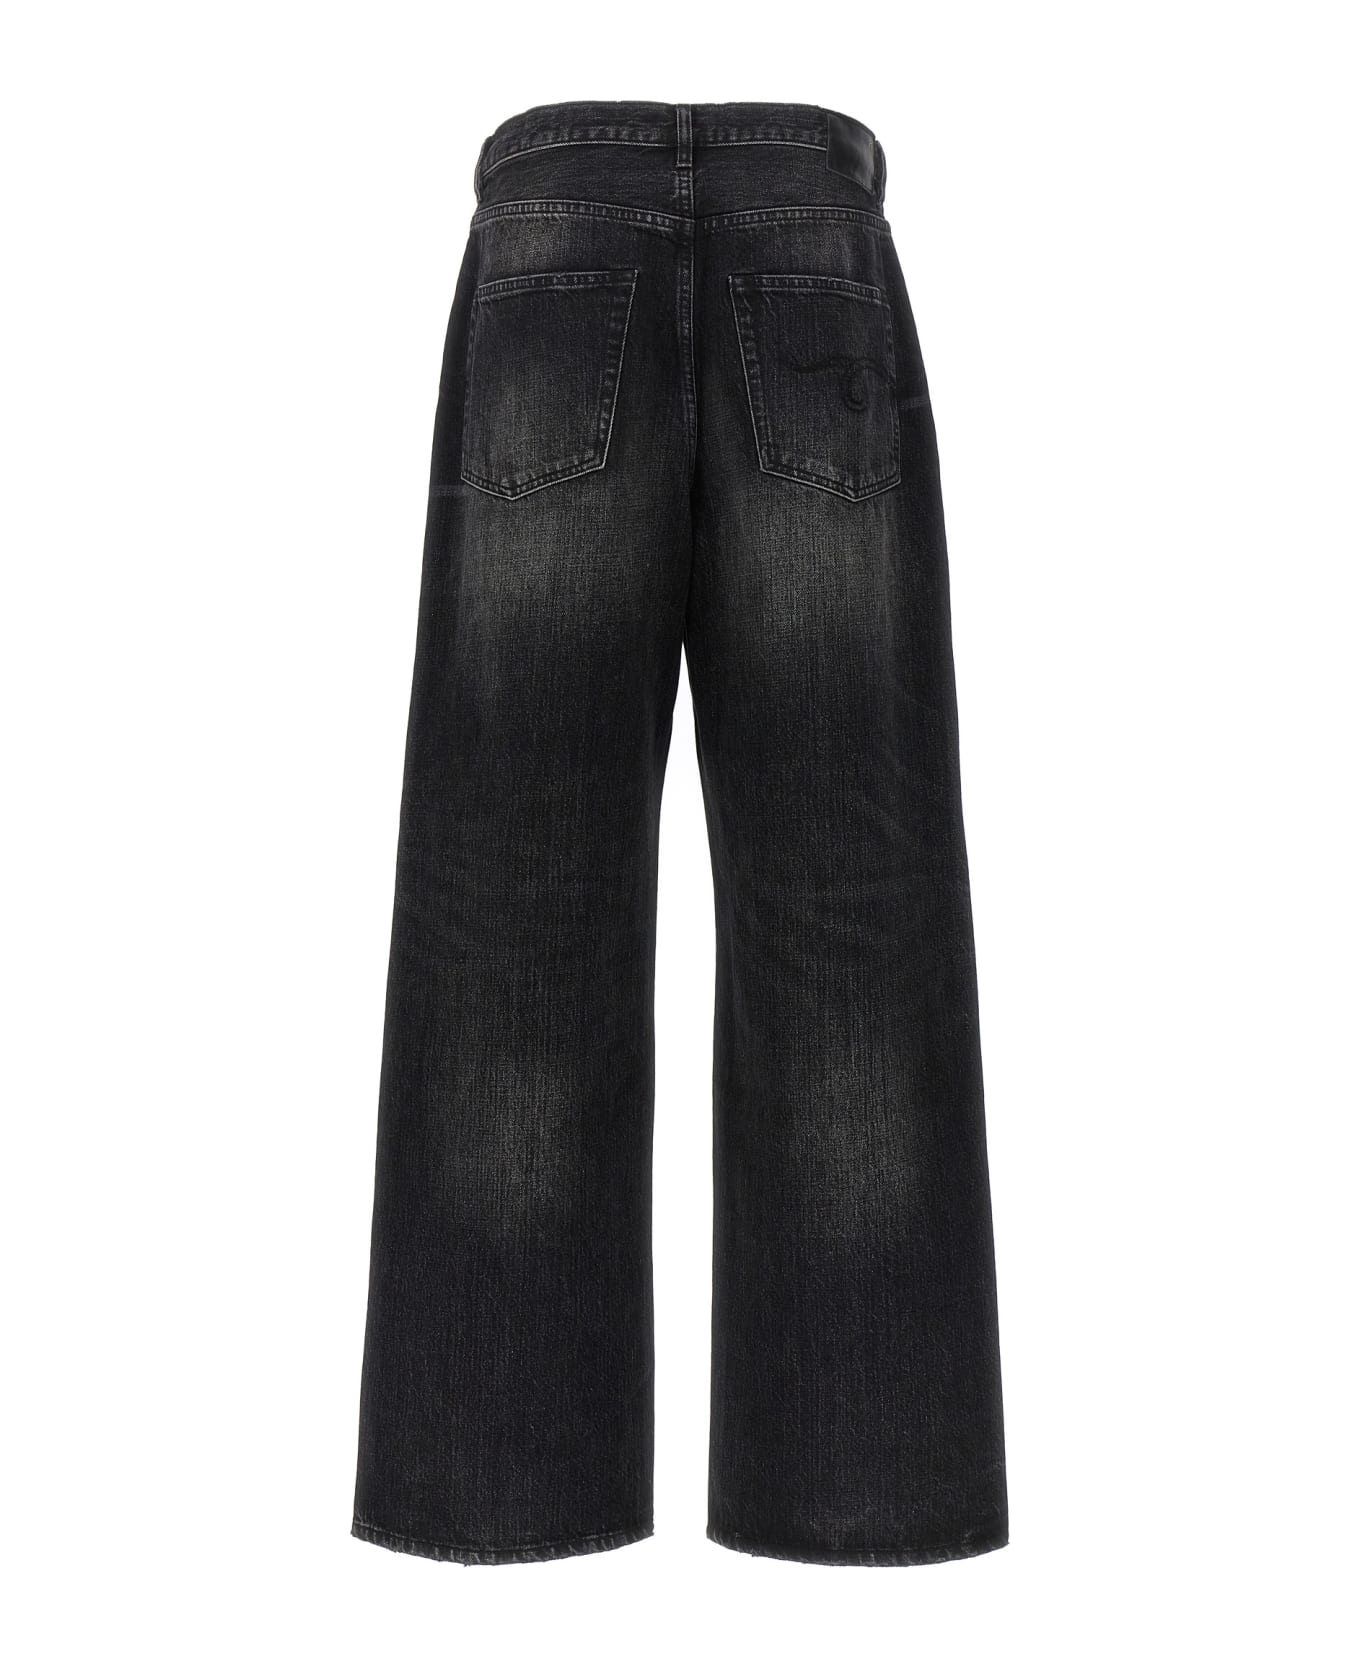 R13 'd'arcy' Jeans - Black  